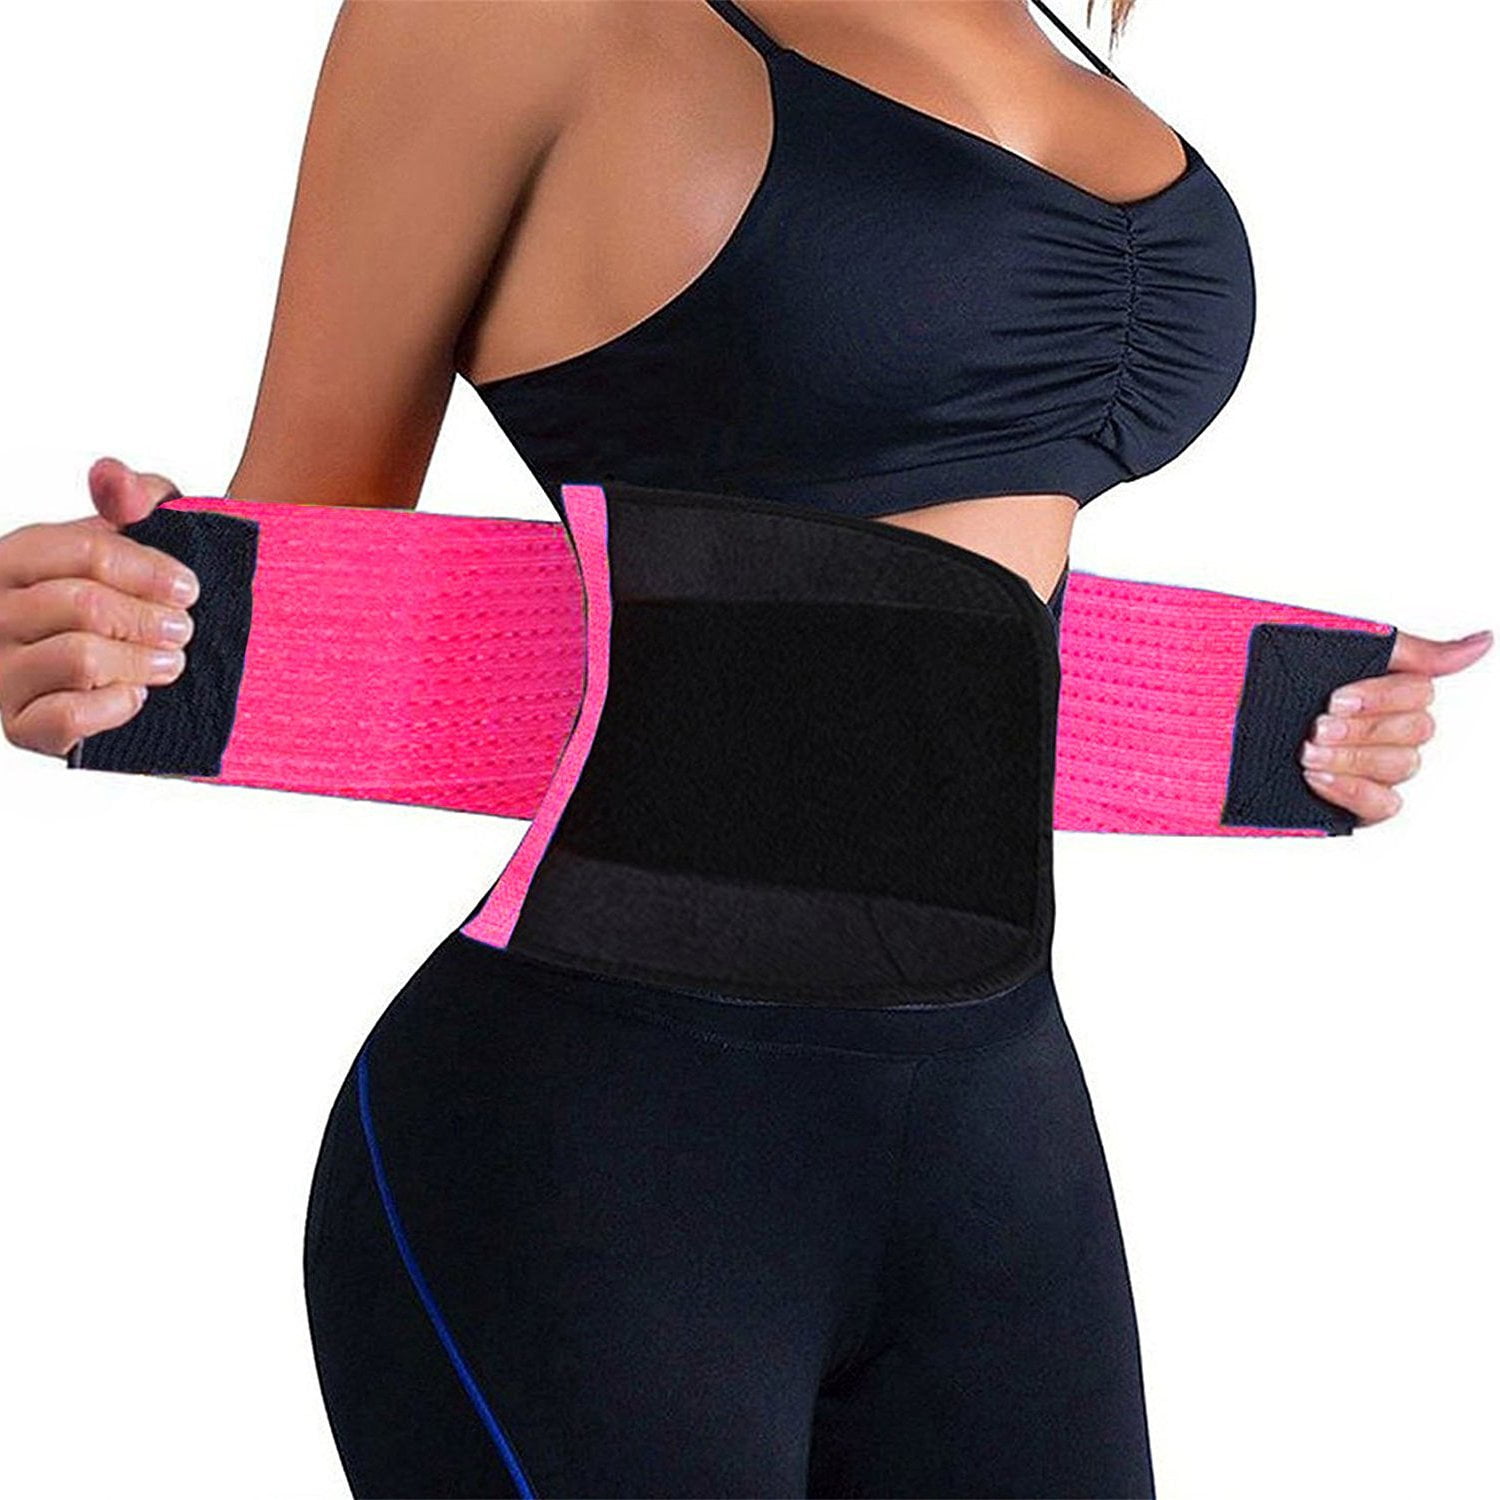 XL Waist Trainer Belt for Women Slimming Body Shaper Hot Sweat Sports Girdles Workout Belt Body Shaper 6Sizes 